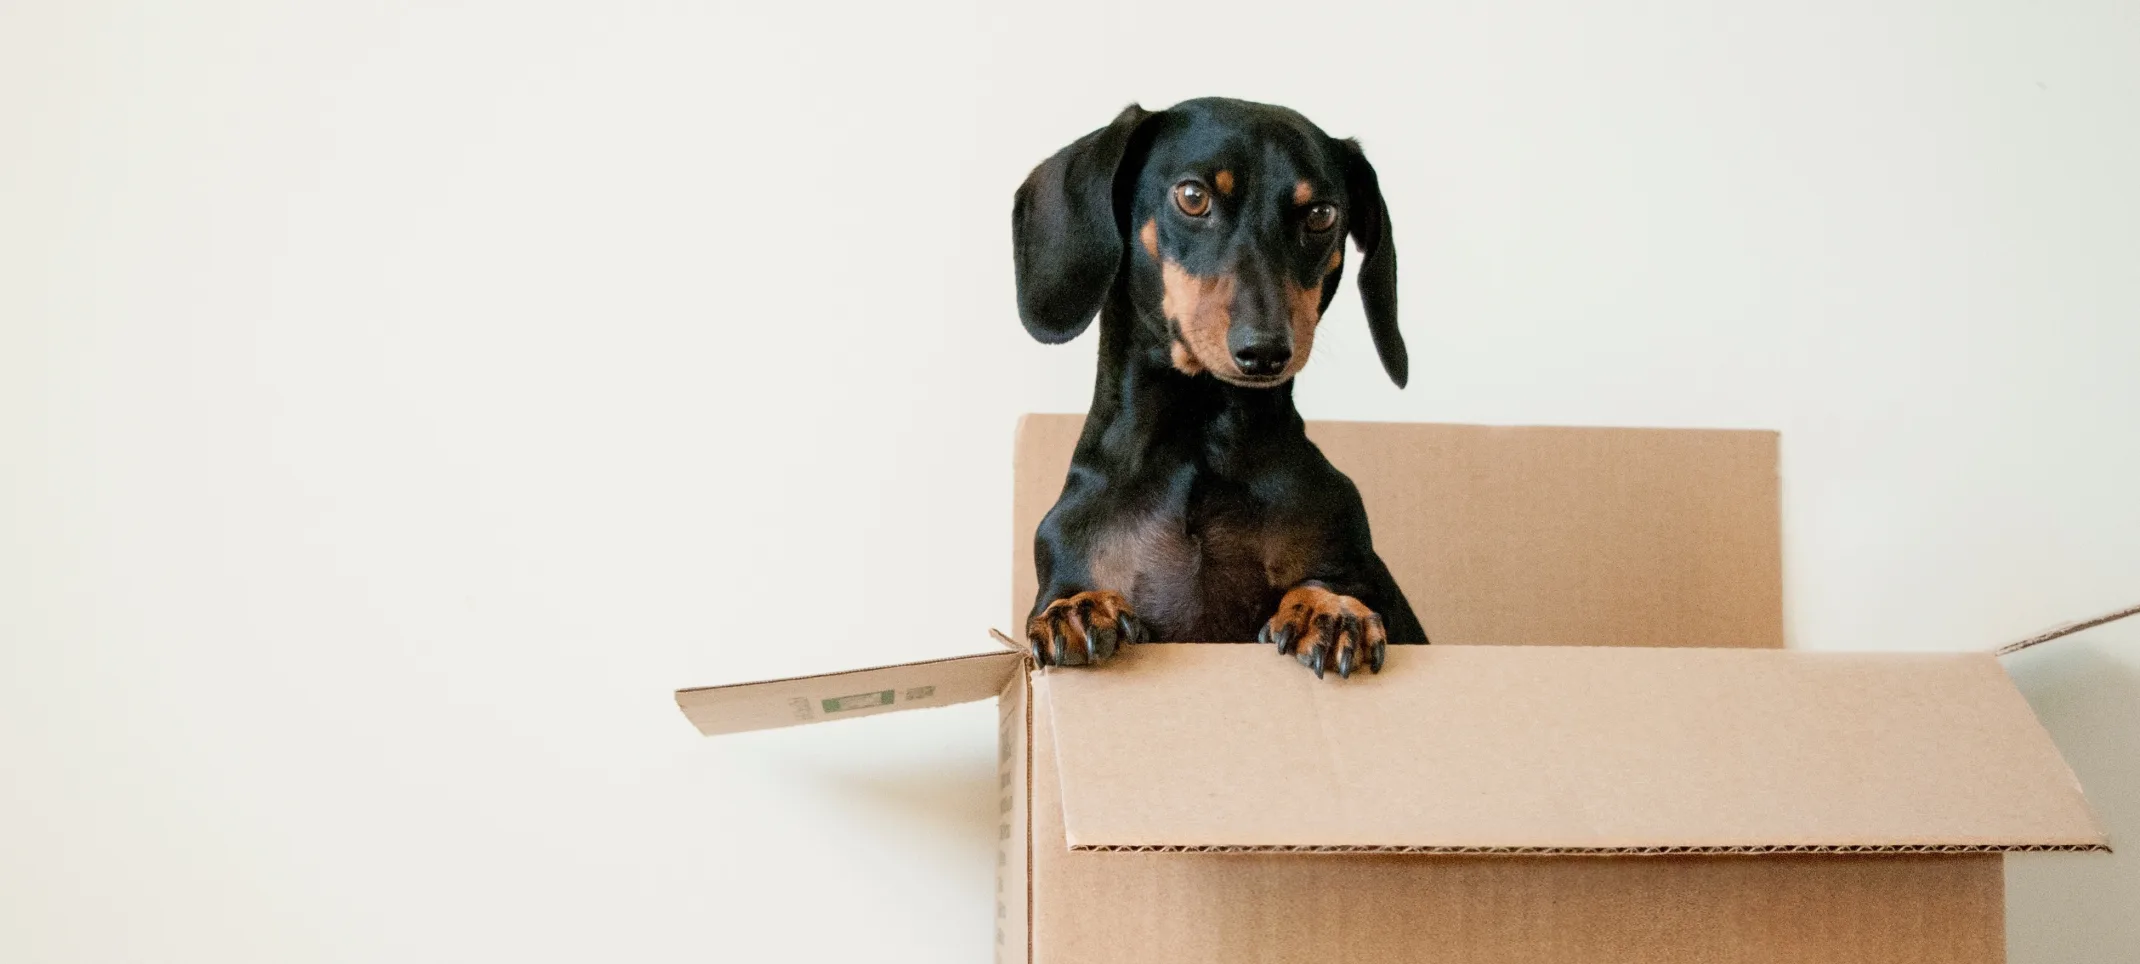 dog sitting in cardboard box